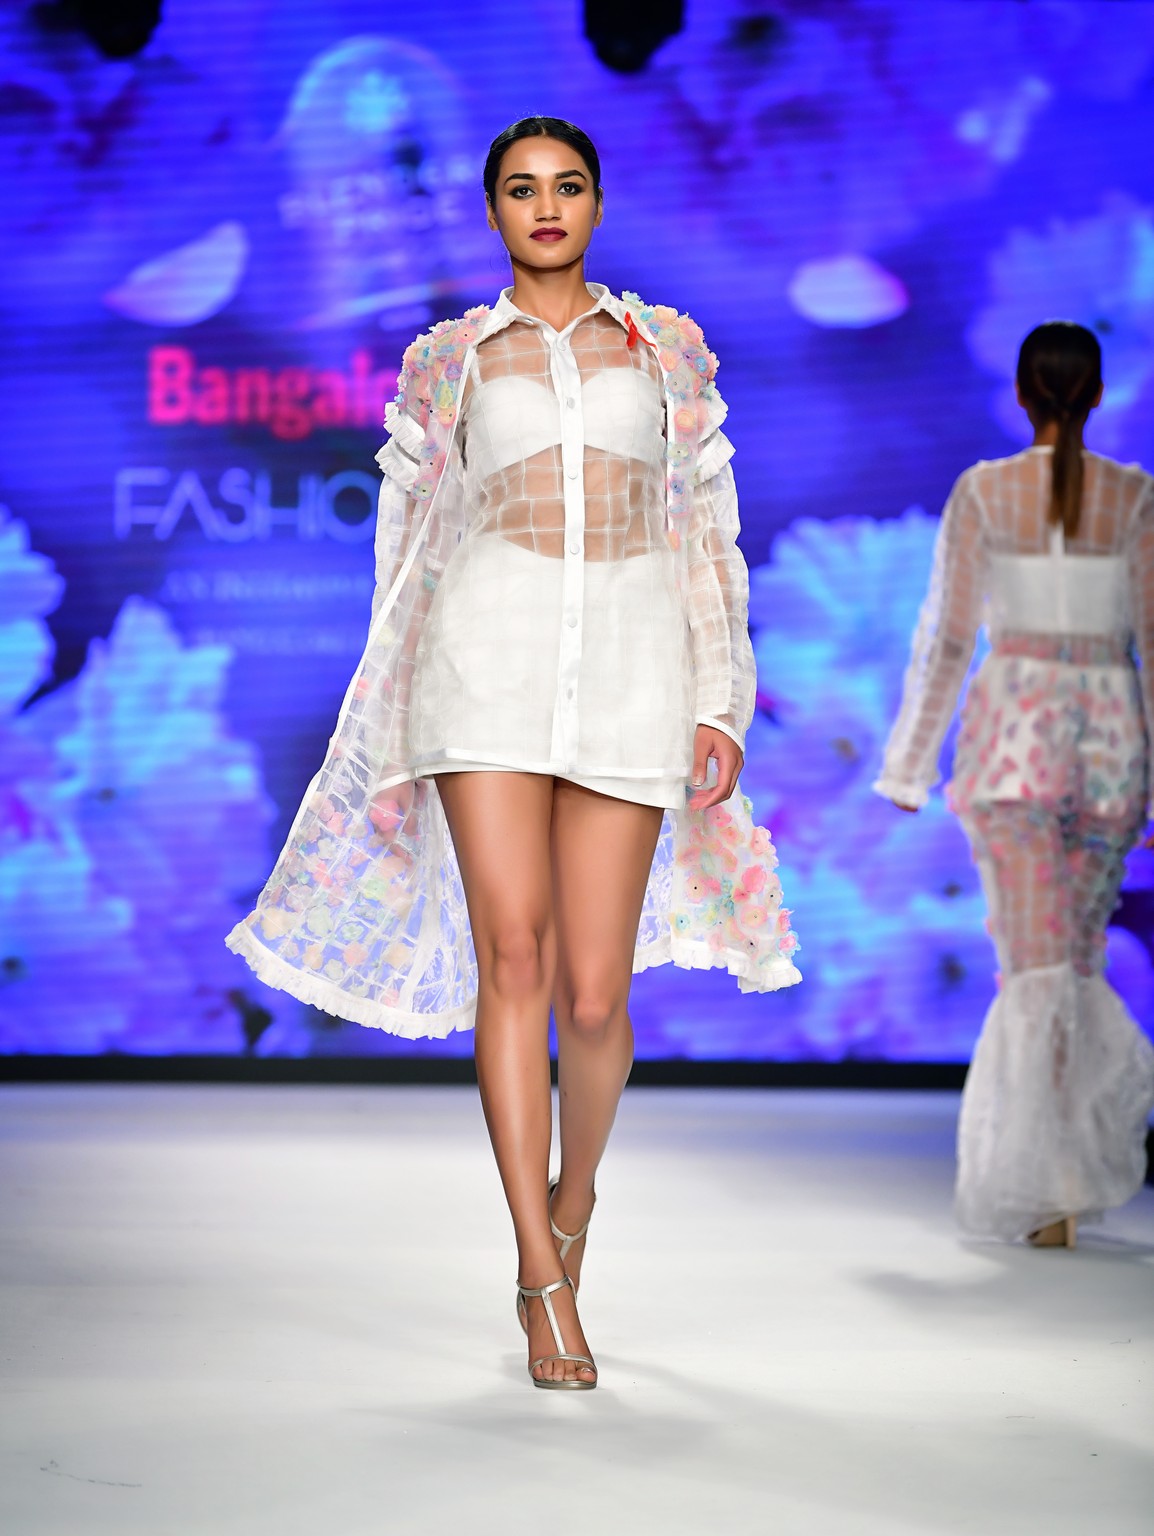 bangalore times fashion week - BTFW Collection5 2 - Jediiians at Bangalore Times Fashion Week 2018